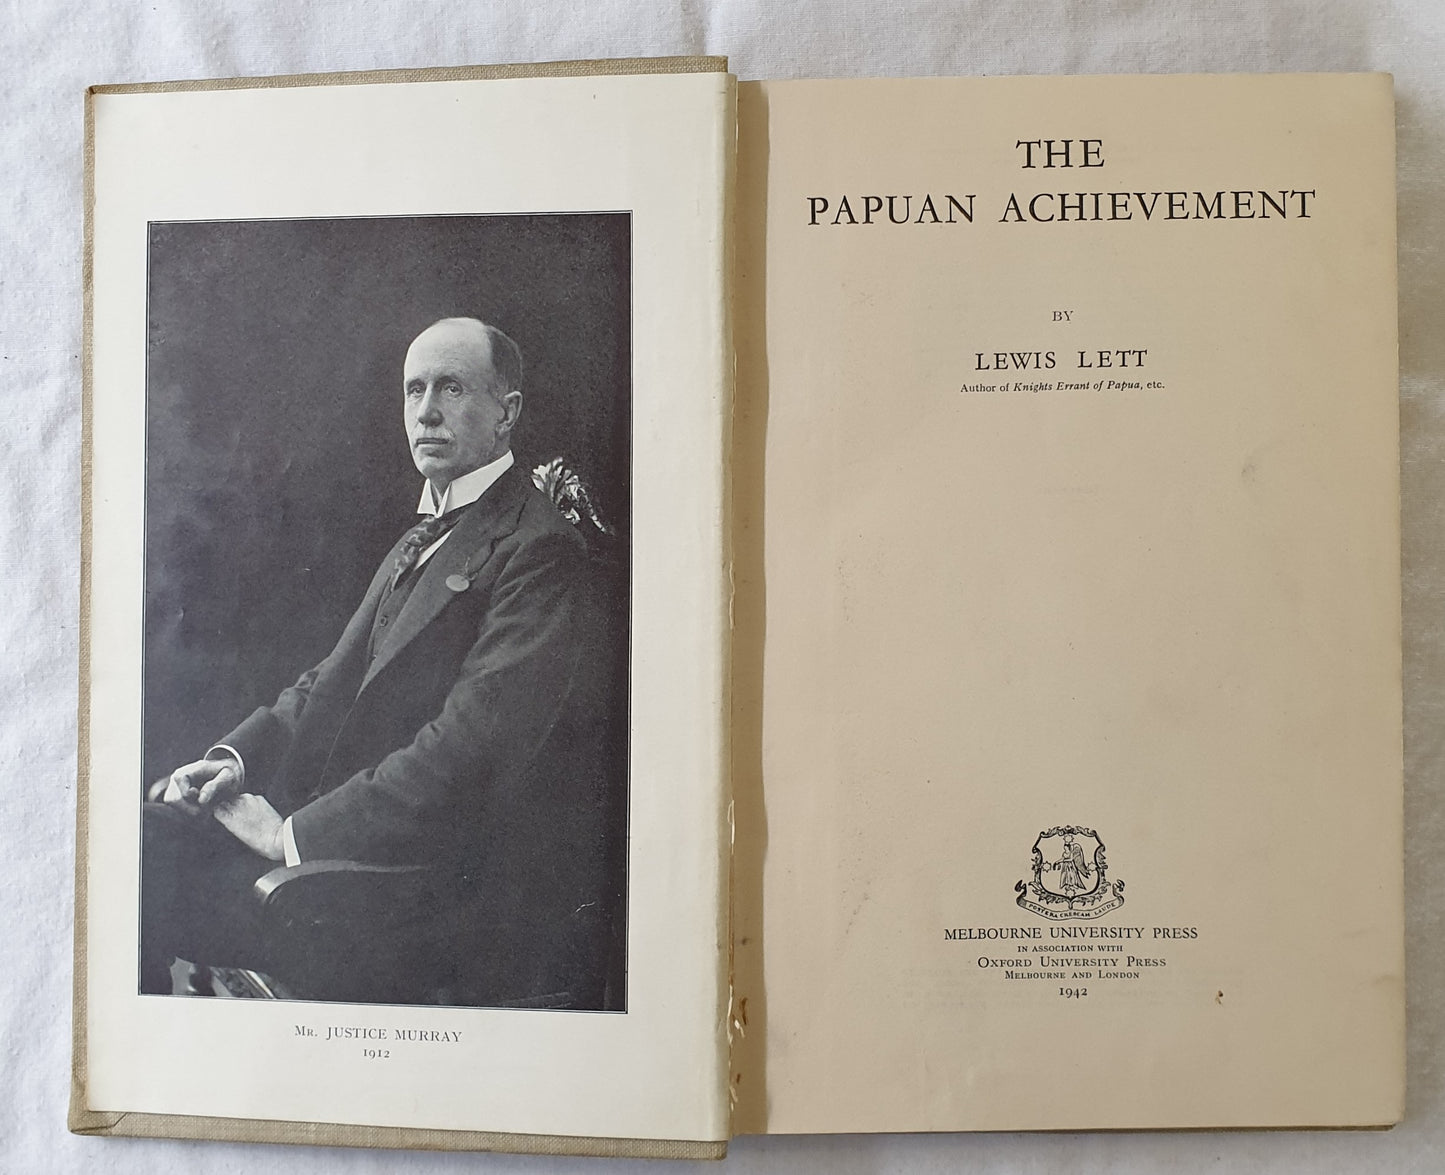 The Papuan Achievement by Lewis Lett